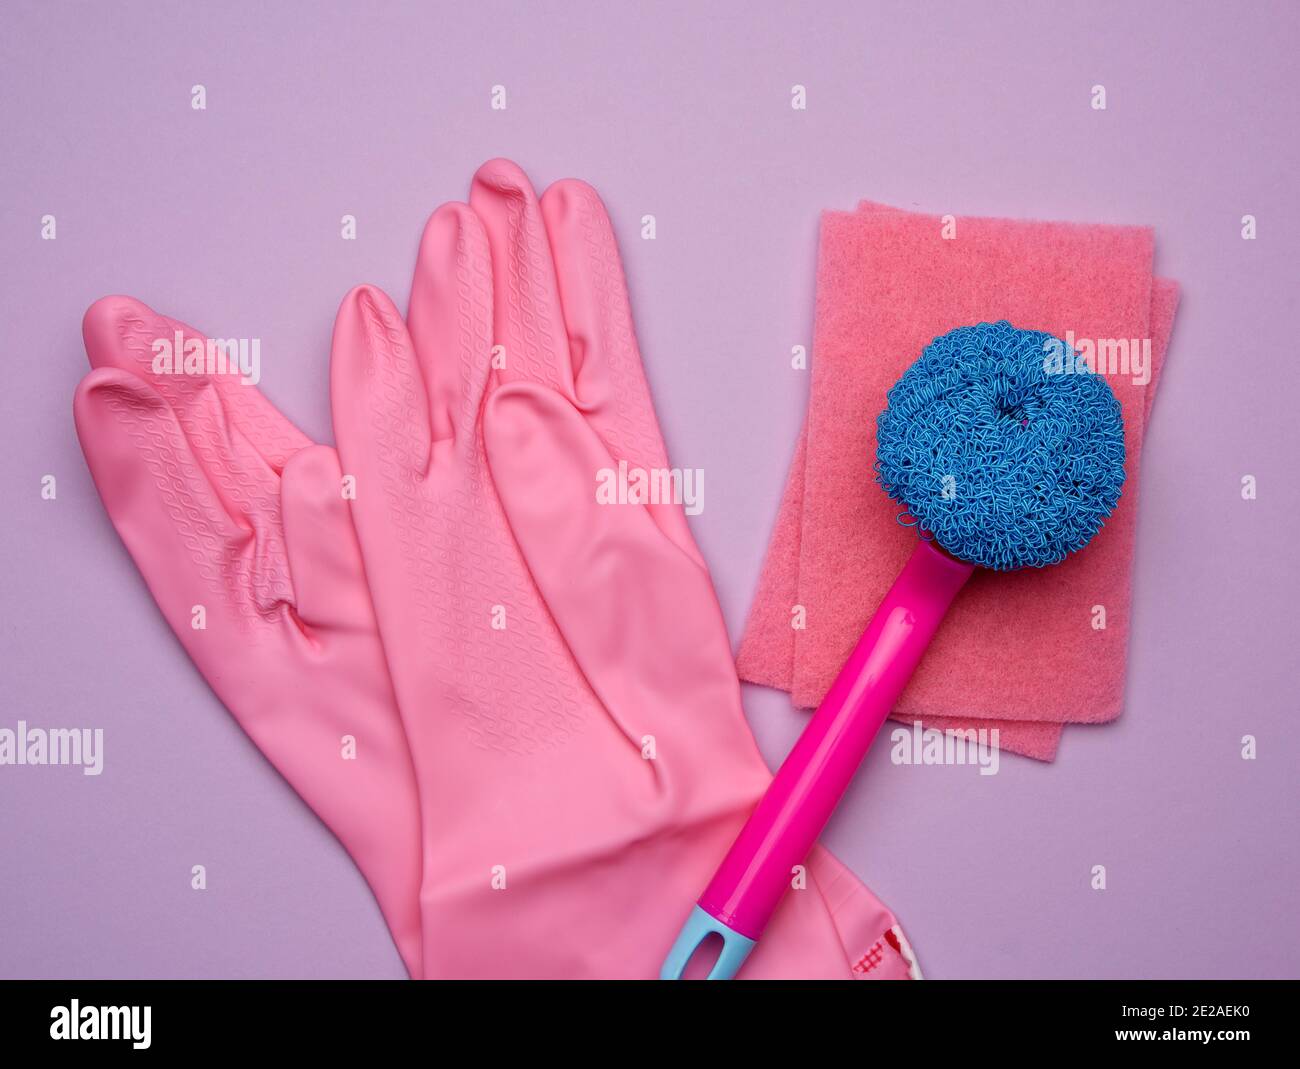 Busty girl pink rubber gloves milks